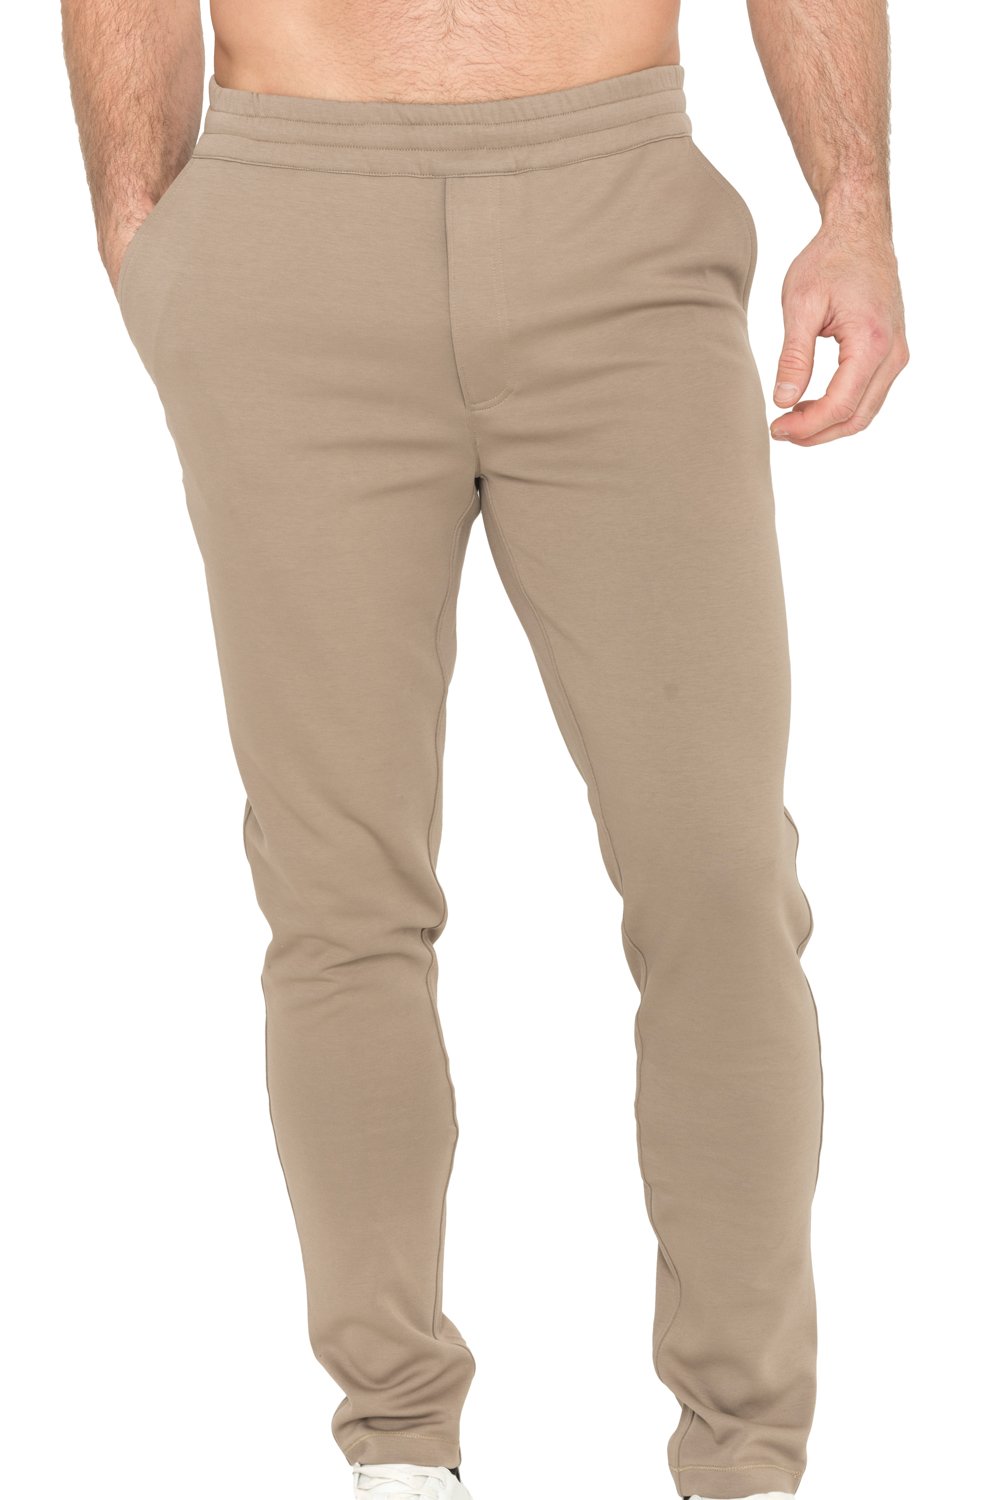 Raffi Aqua Cotton Easy Pants - RW12356p